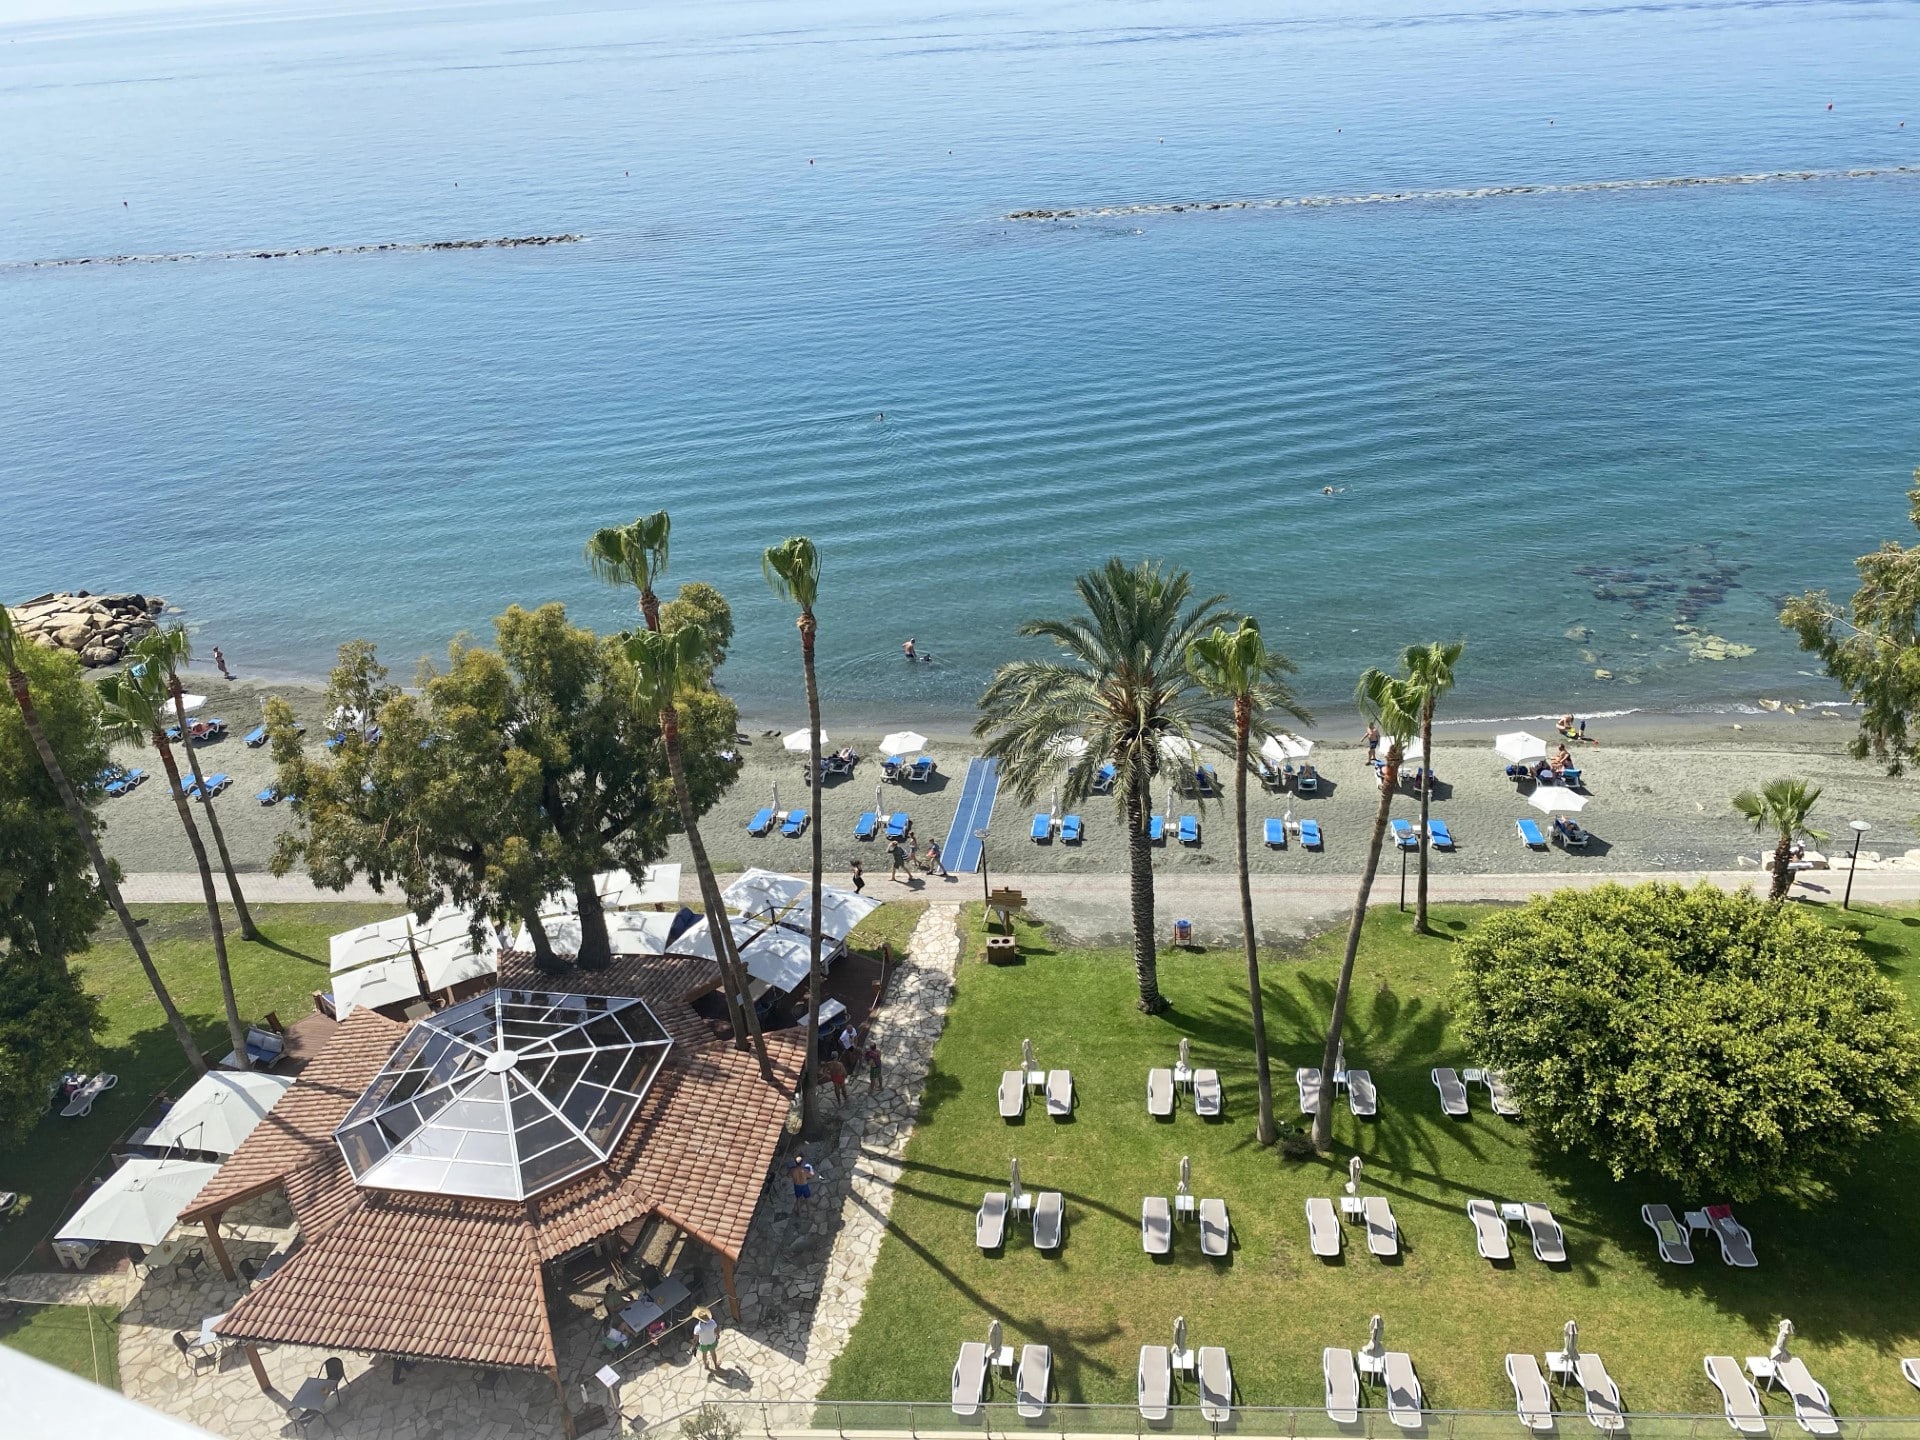 The Poseidonia beach hotel in Limassol